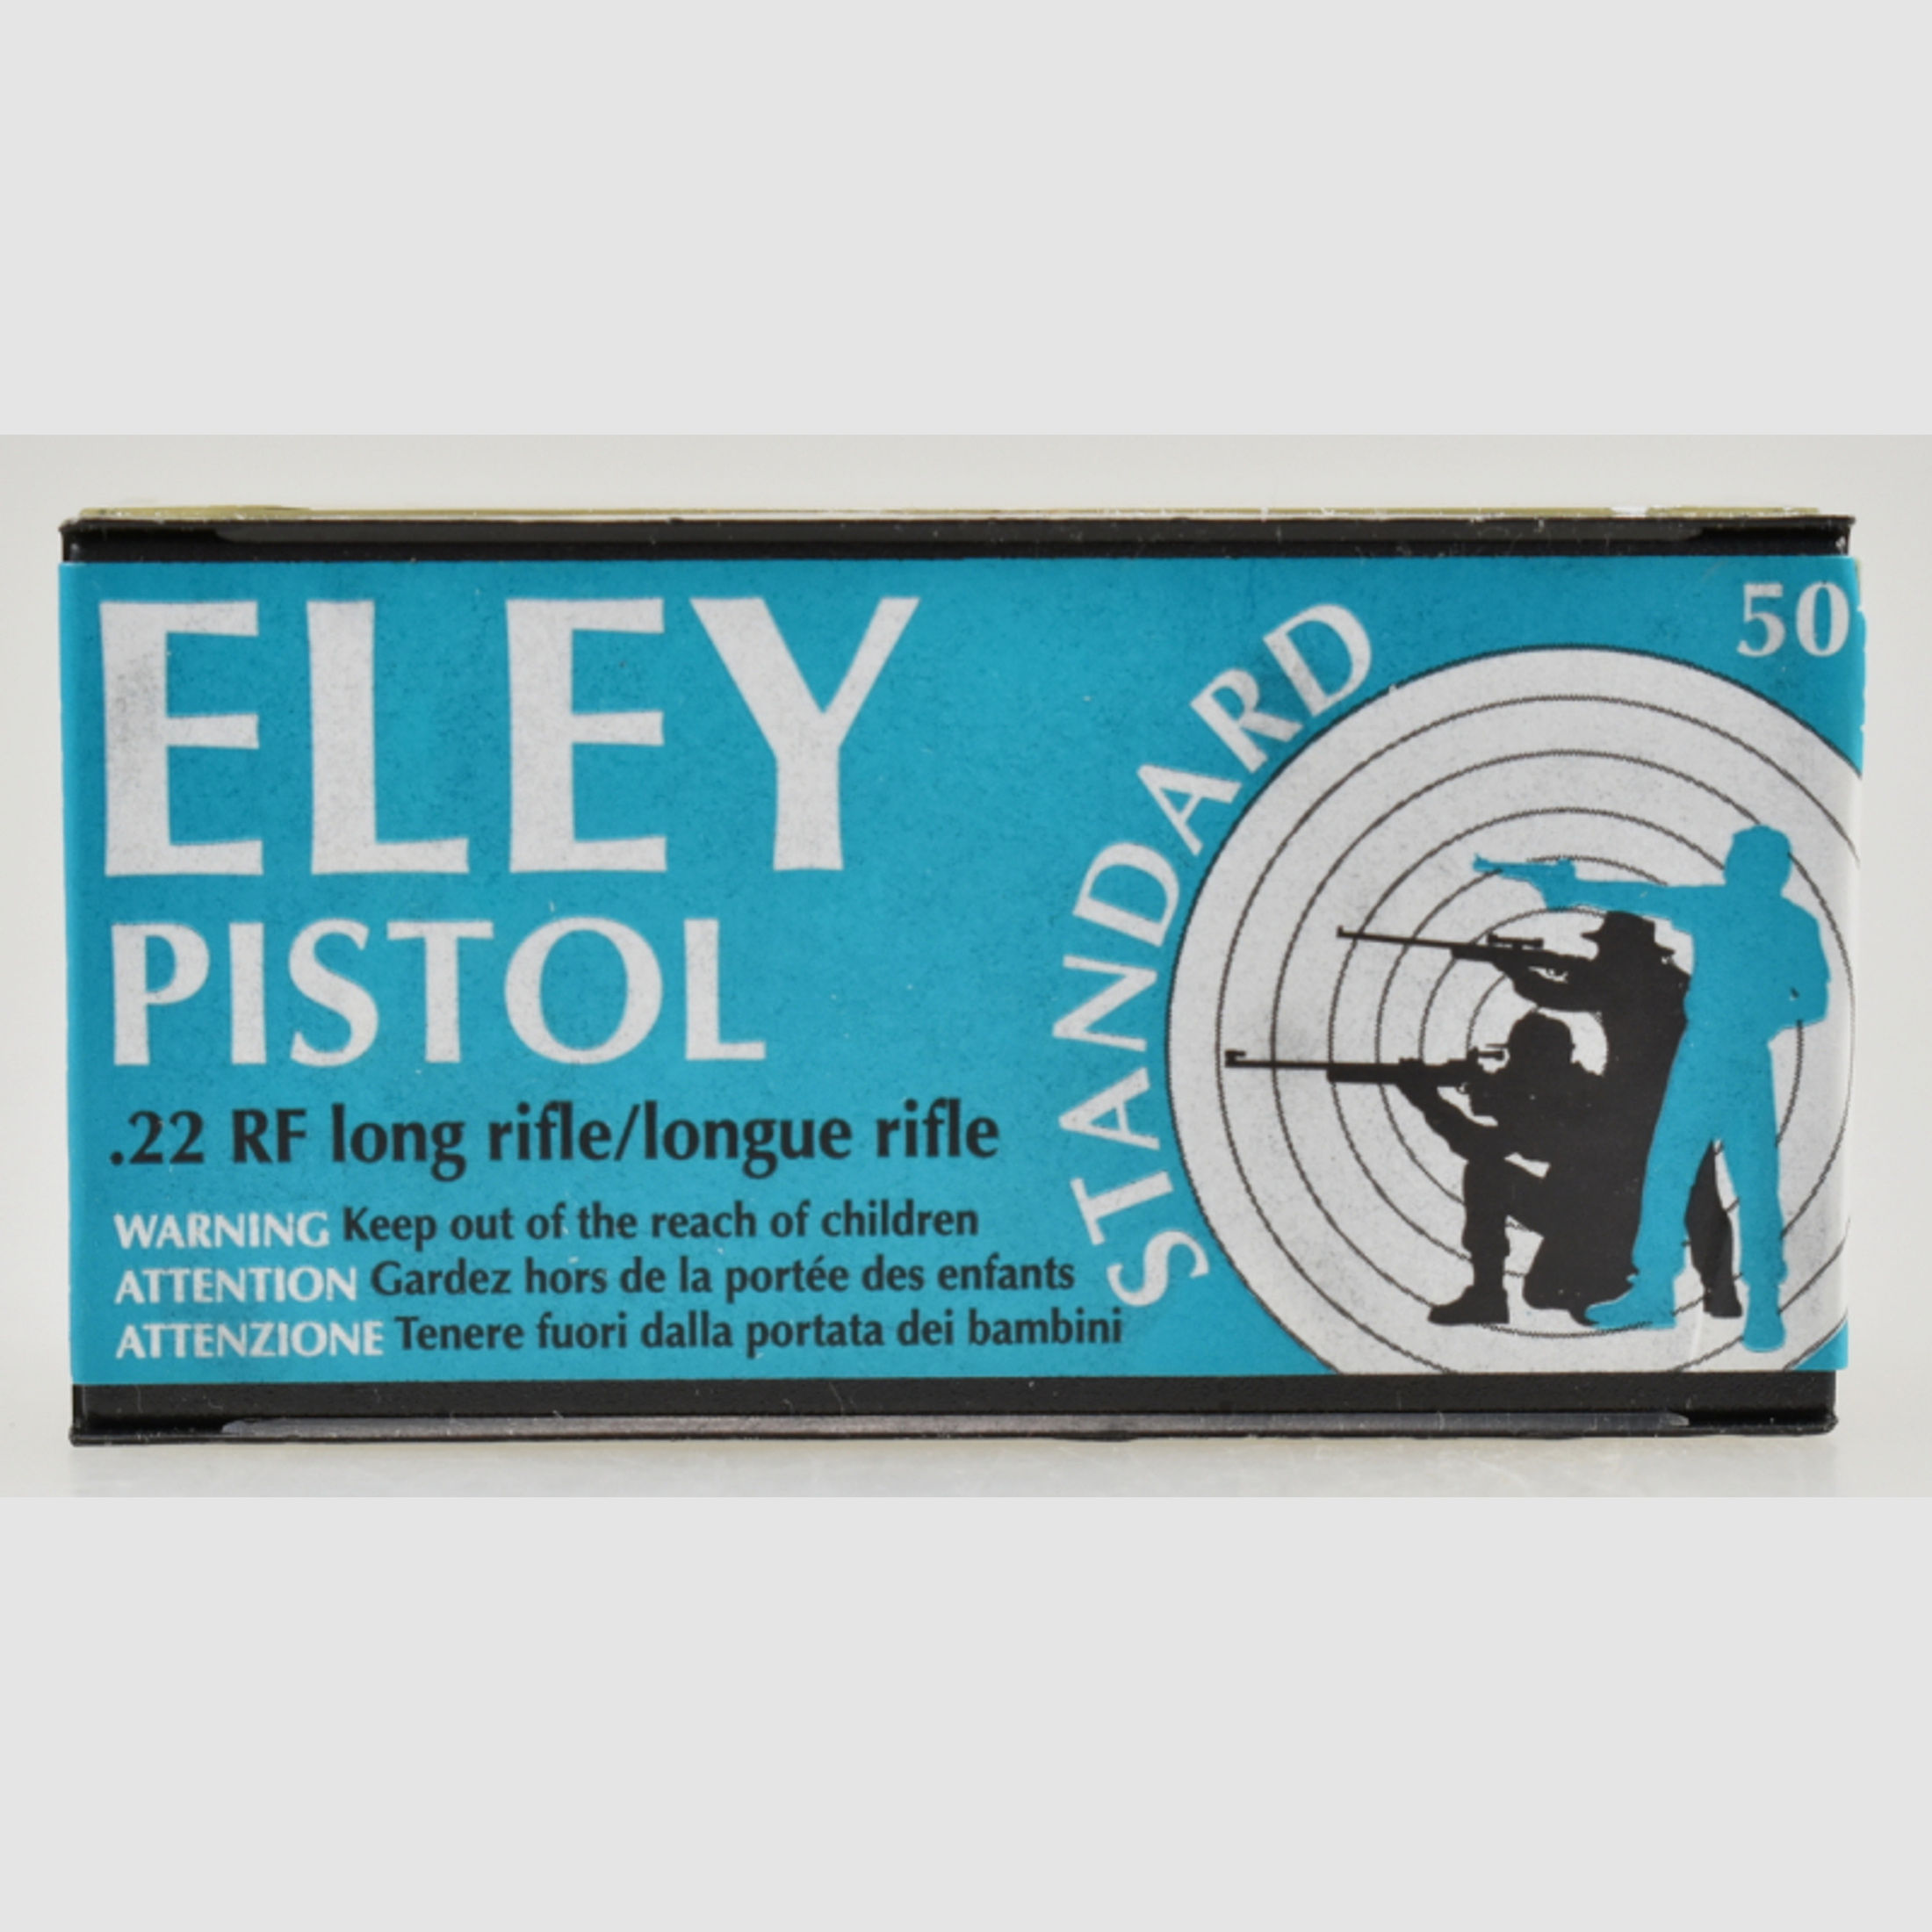 50 Eley Pistol Patronen .22l.r.